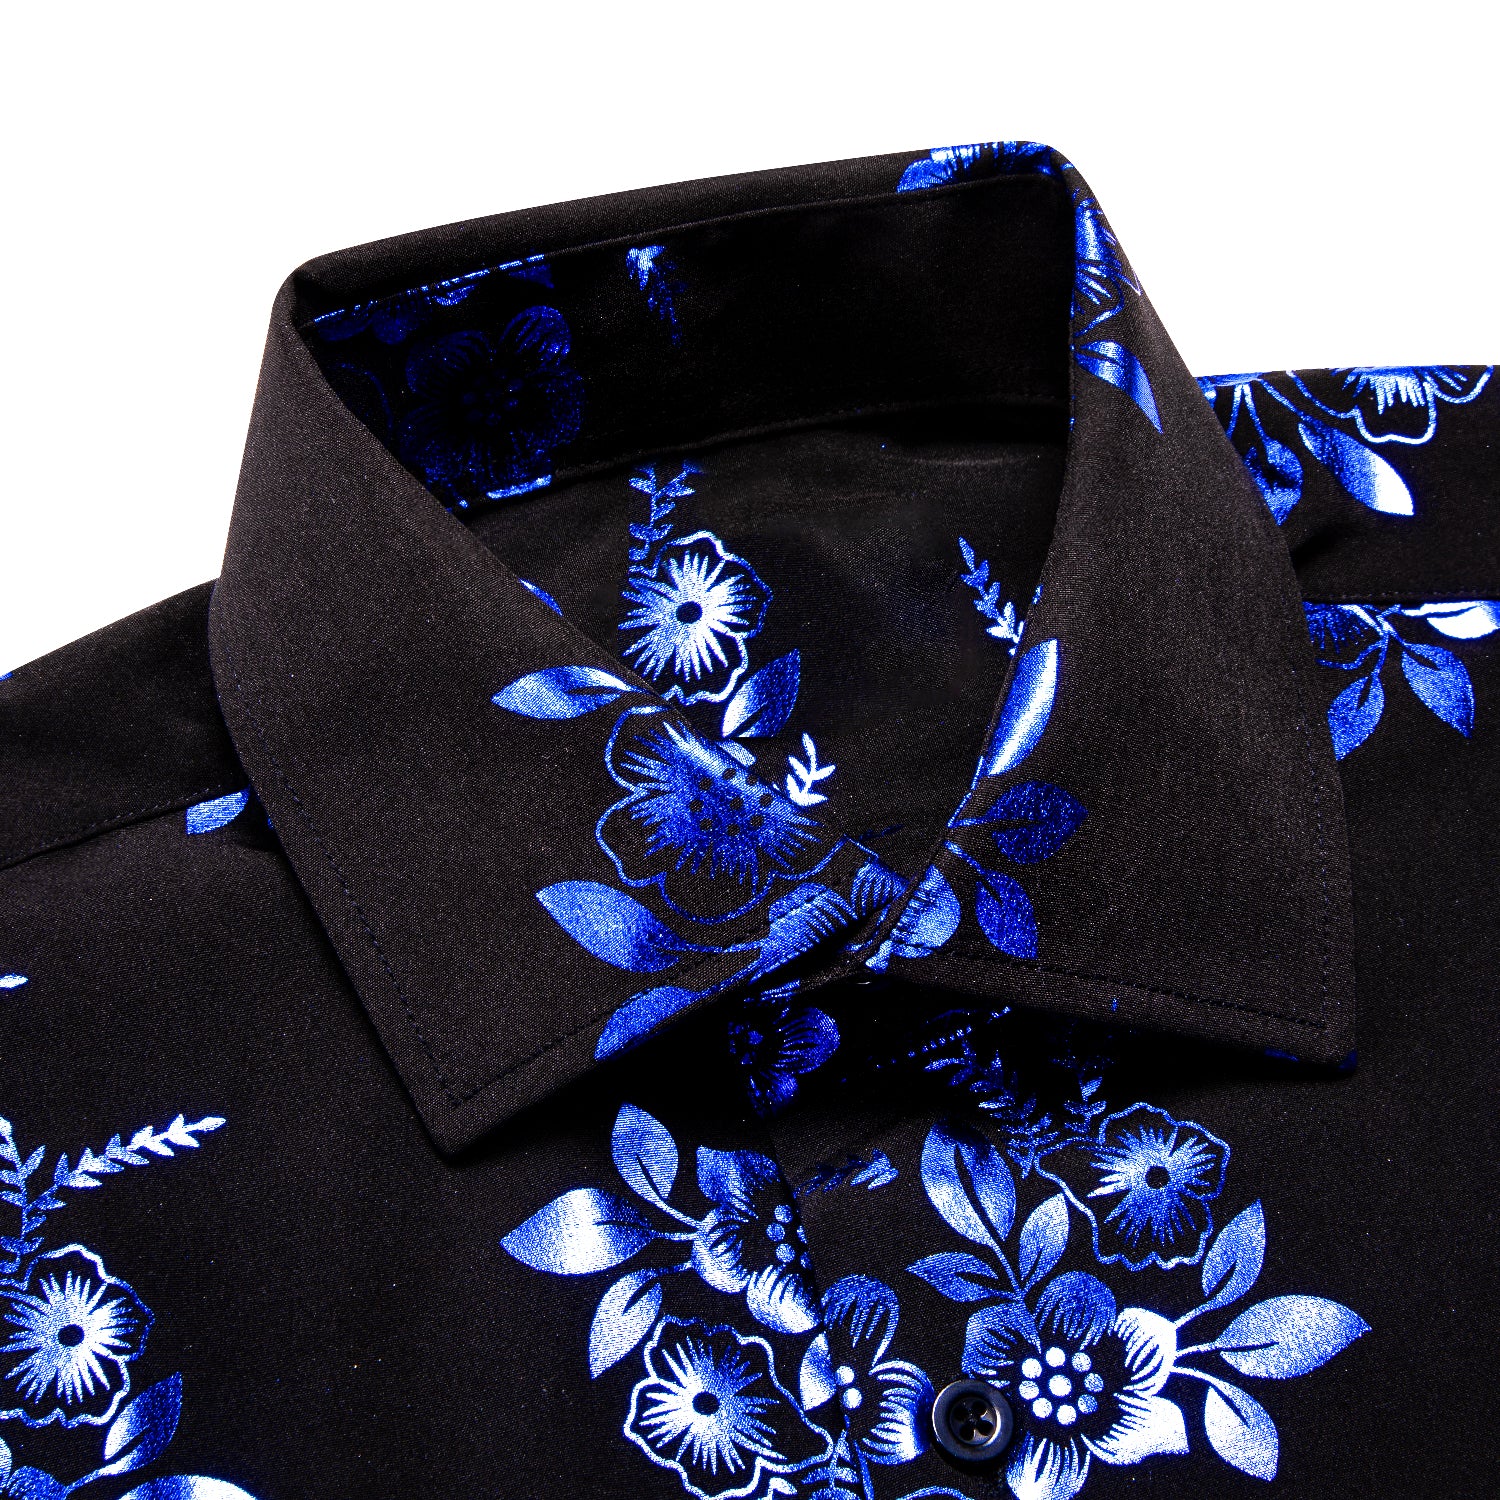 Clearance Sale New Black Blue Flower Men's Shirt